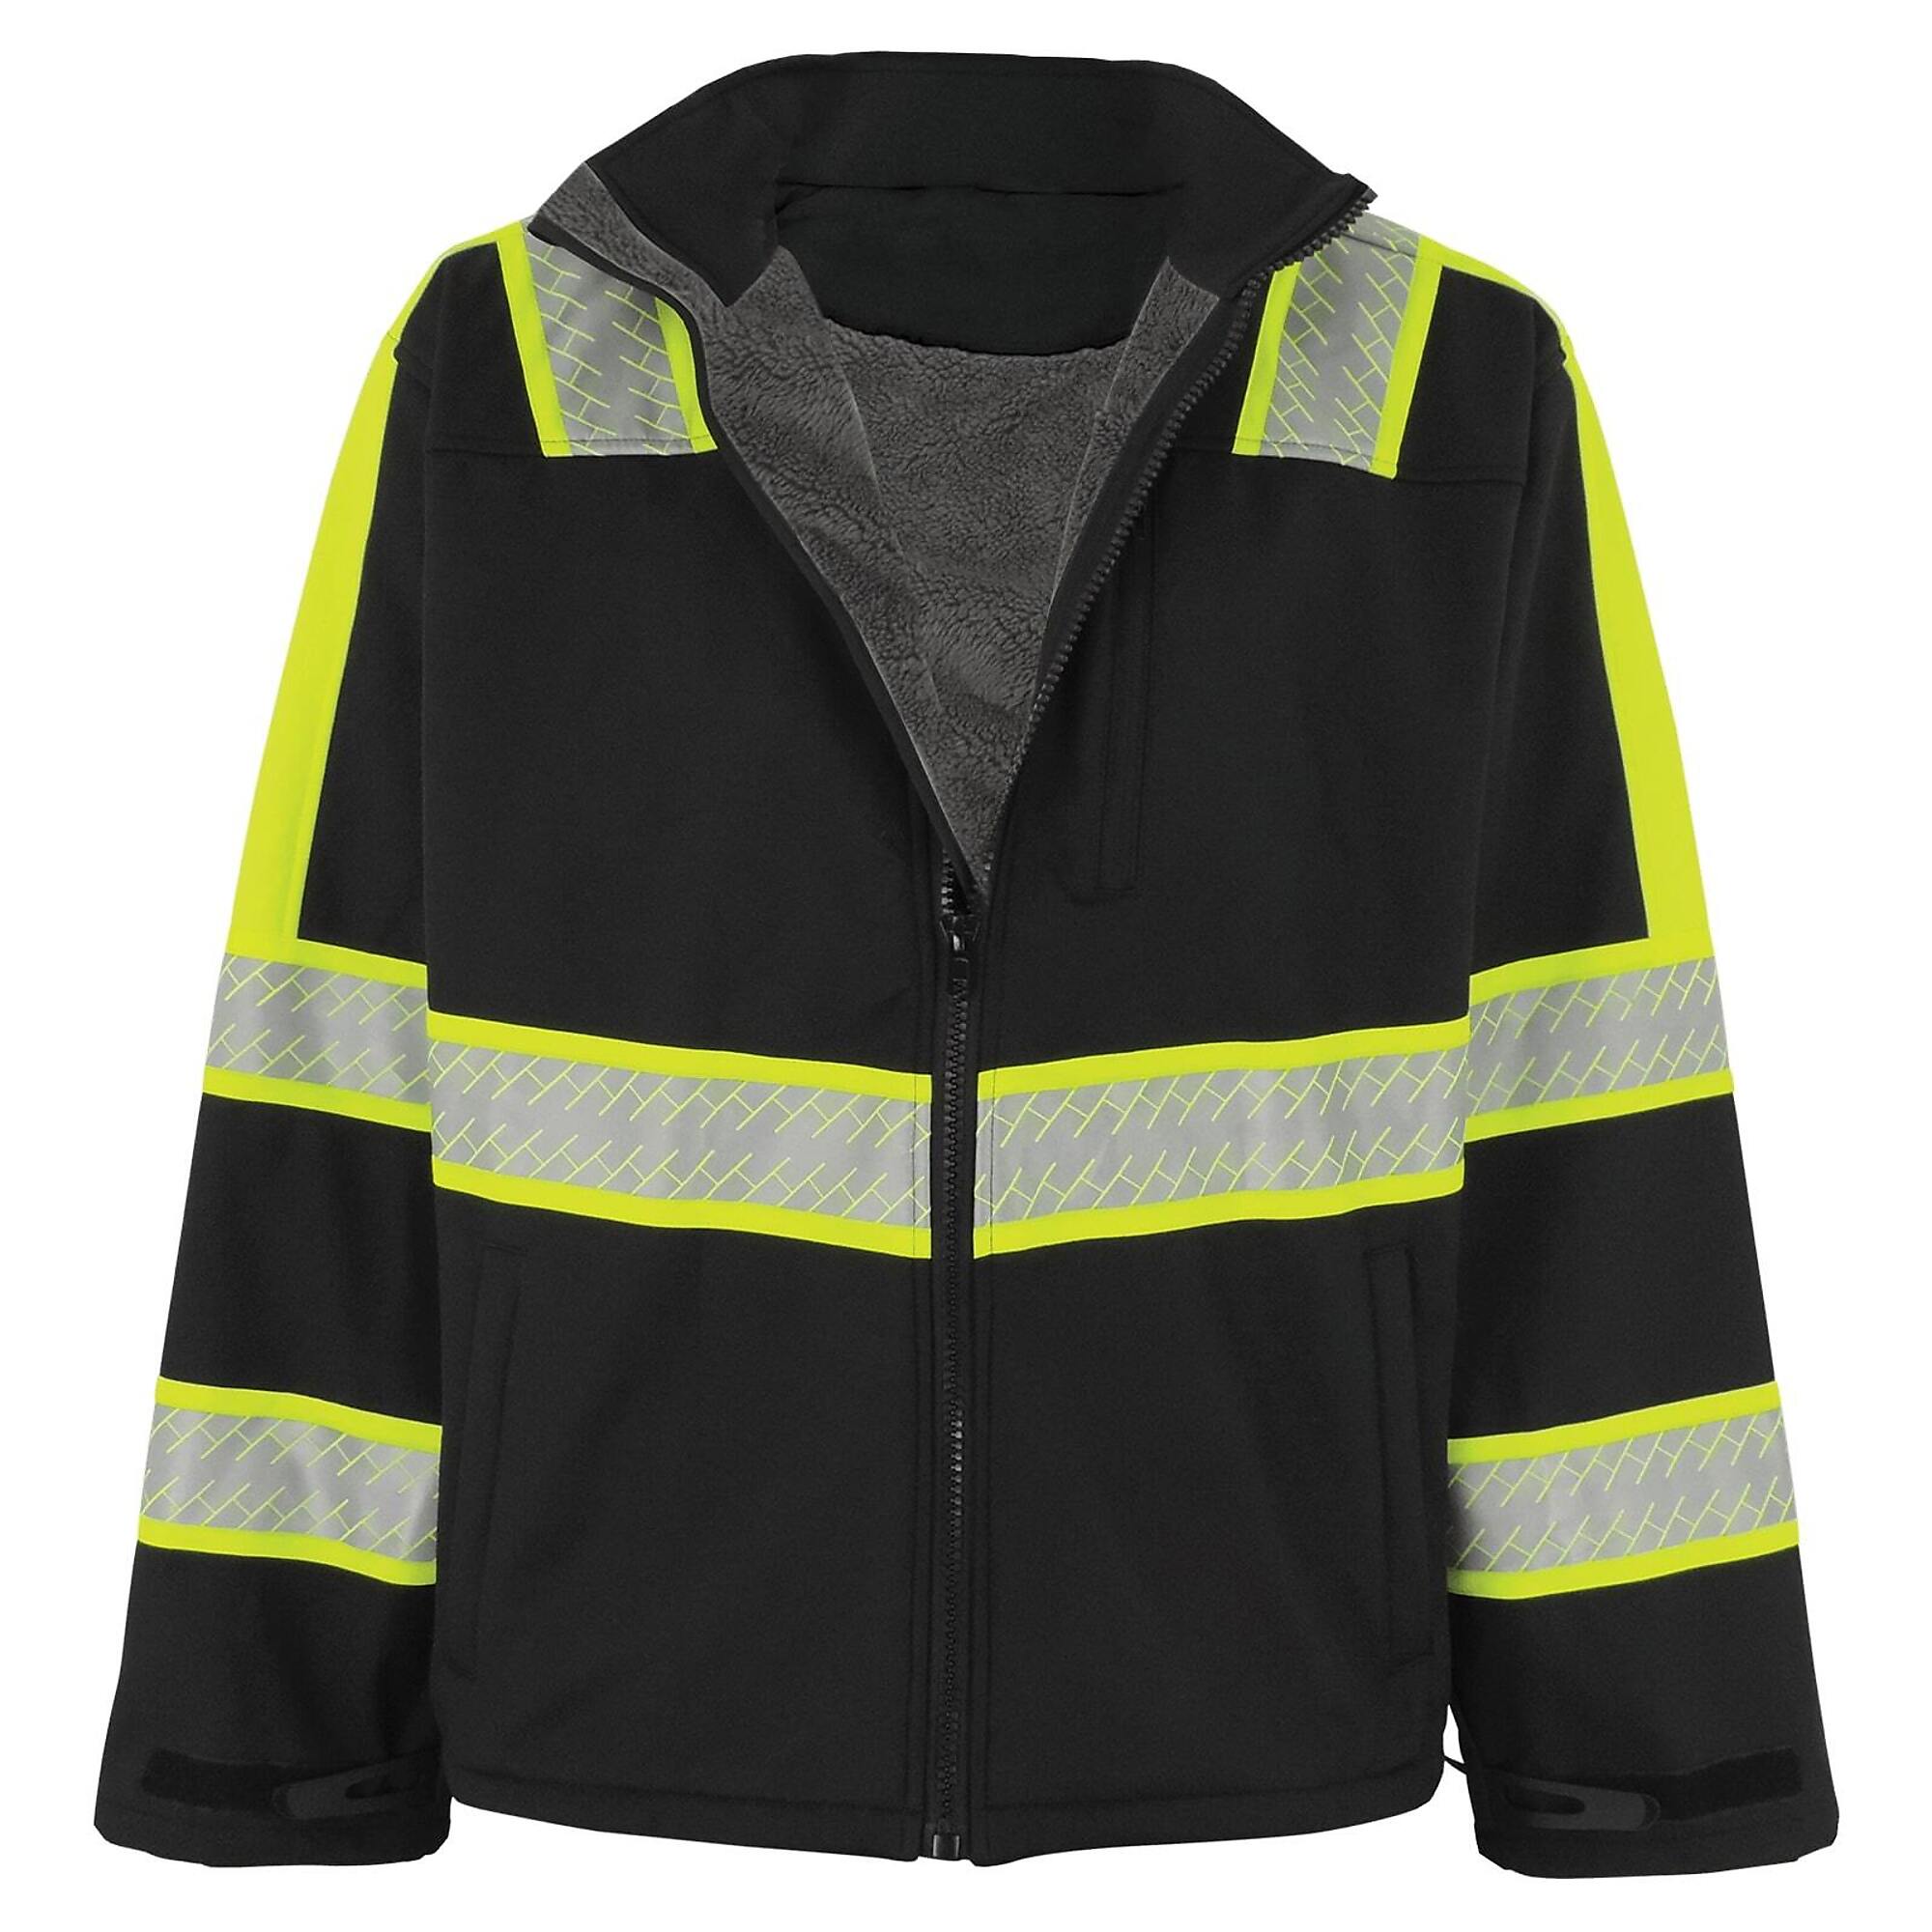 FrogWear, Prem Enhanced Visibility Black Sherpa-Lined Jacket, Size 3XL, Color Black with Silver Reflective, Model EV-SJ1-3XL